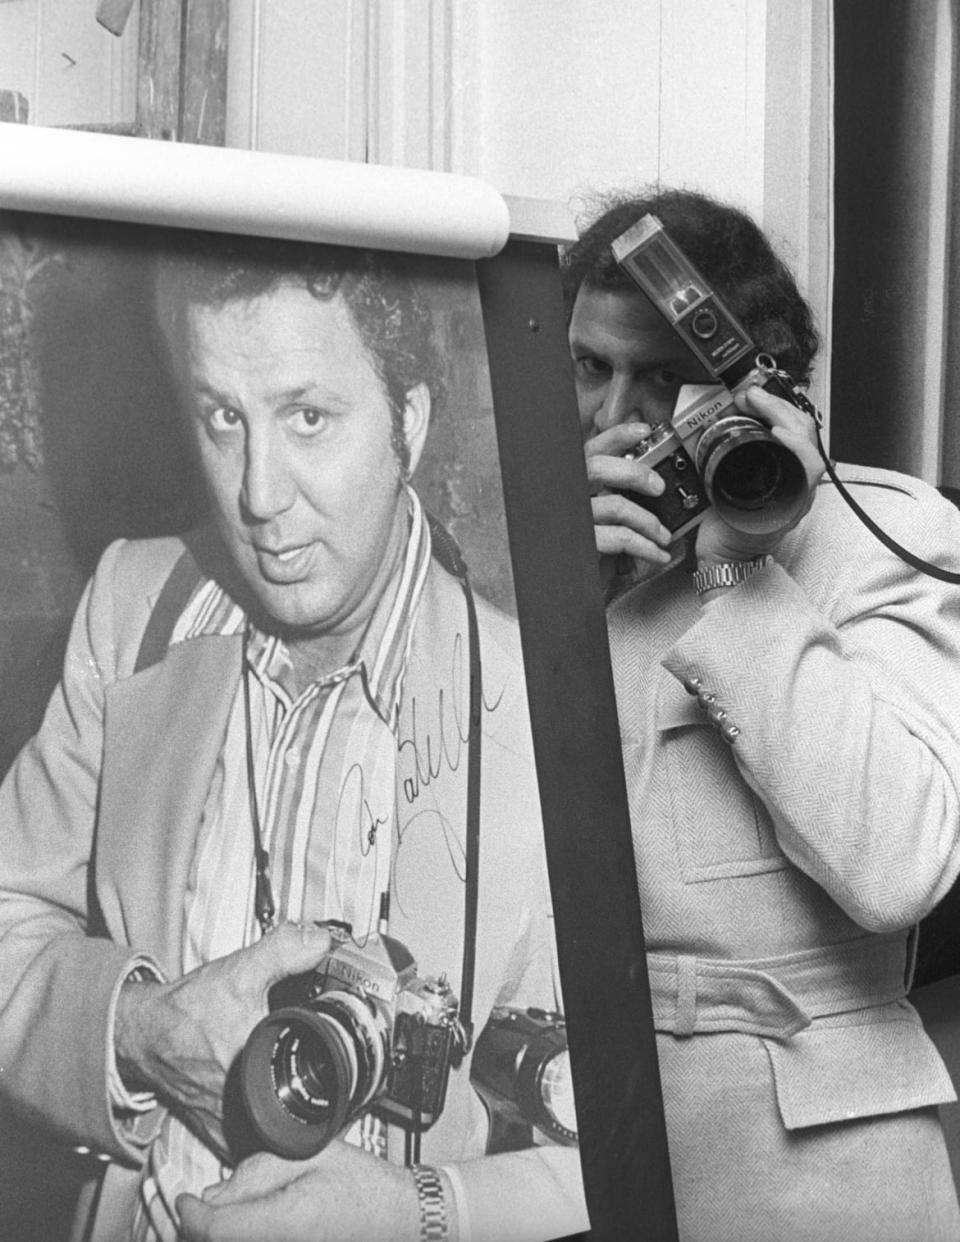 <div class="inline-image__caption"><p>Photographer Ron Galella attends Photo Exhibit on April 20, 1975 at Salon de Refuses in New York City. </p></div> <div class="inline-image__credit">Ron Galella / Ron Galella Collection / Getty</div>